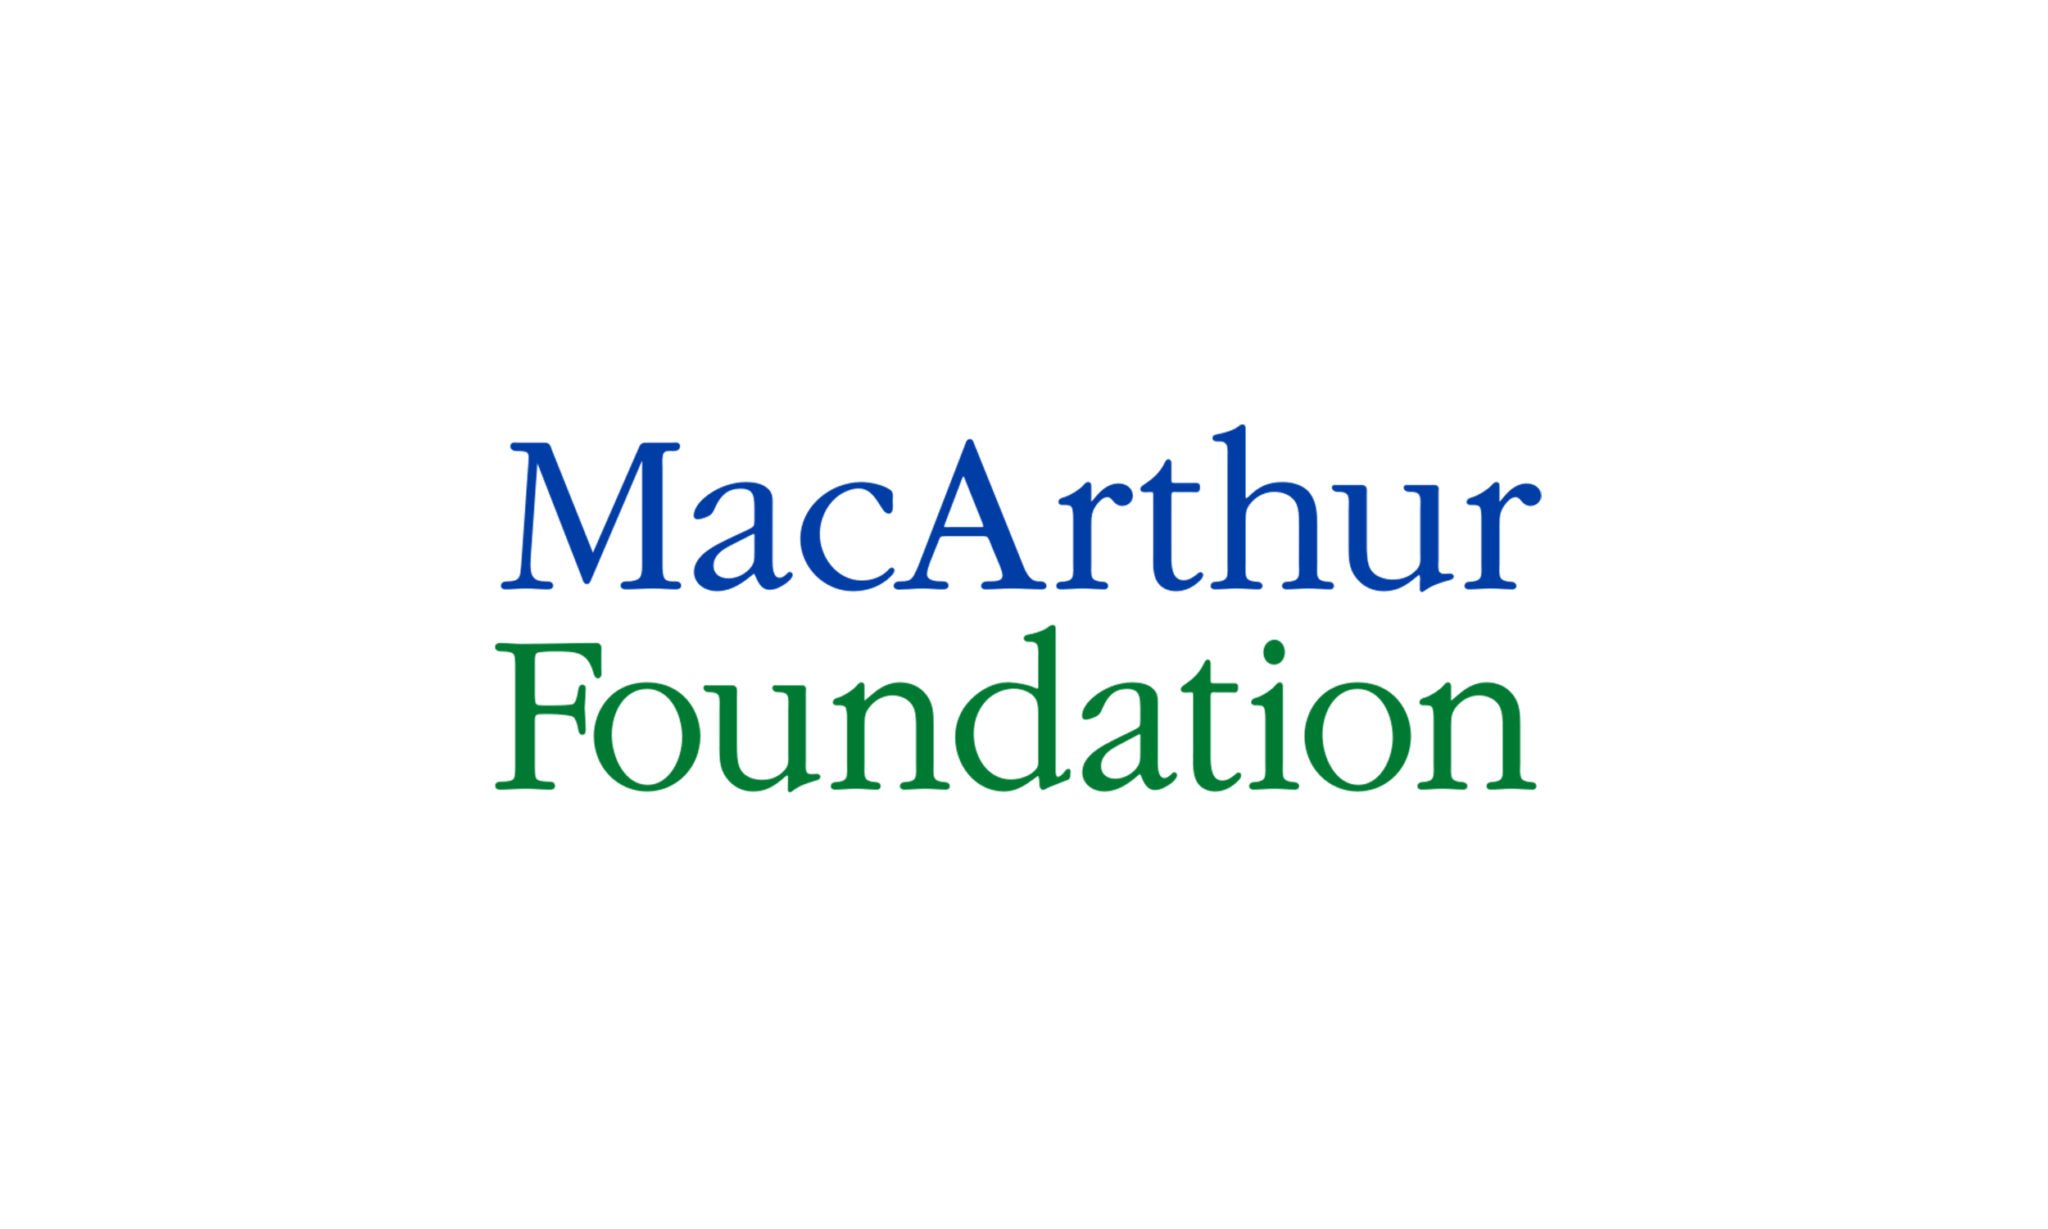 MacArthur Foundation logo.jpg